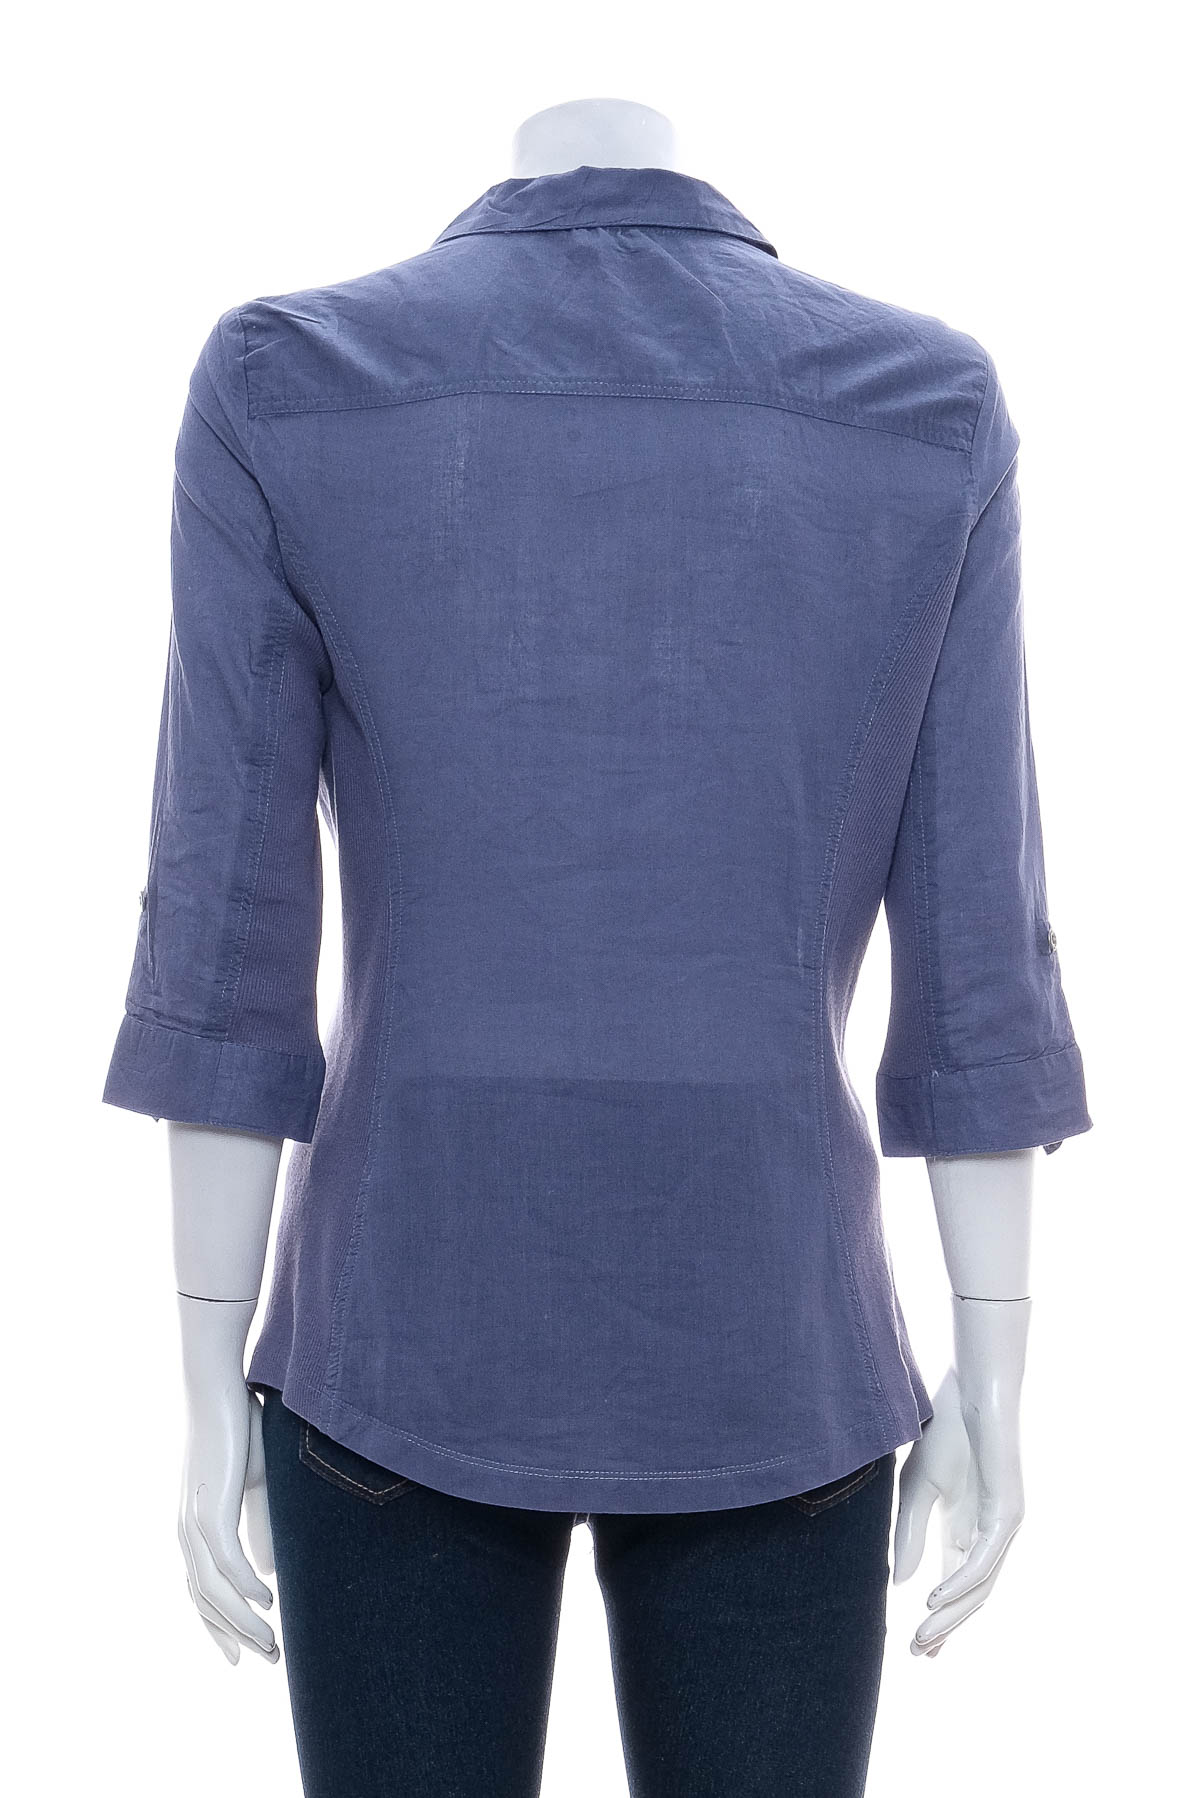 Women's shirt - Orsay - 1